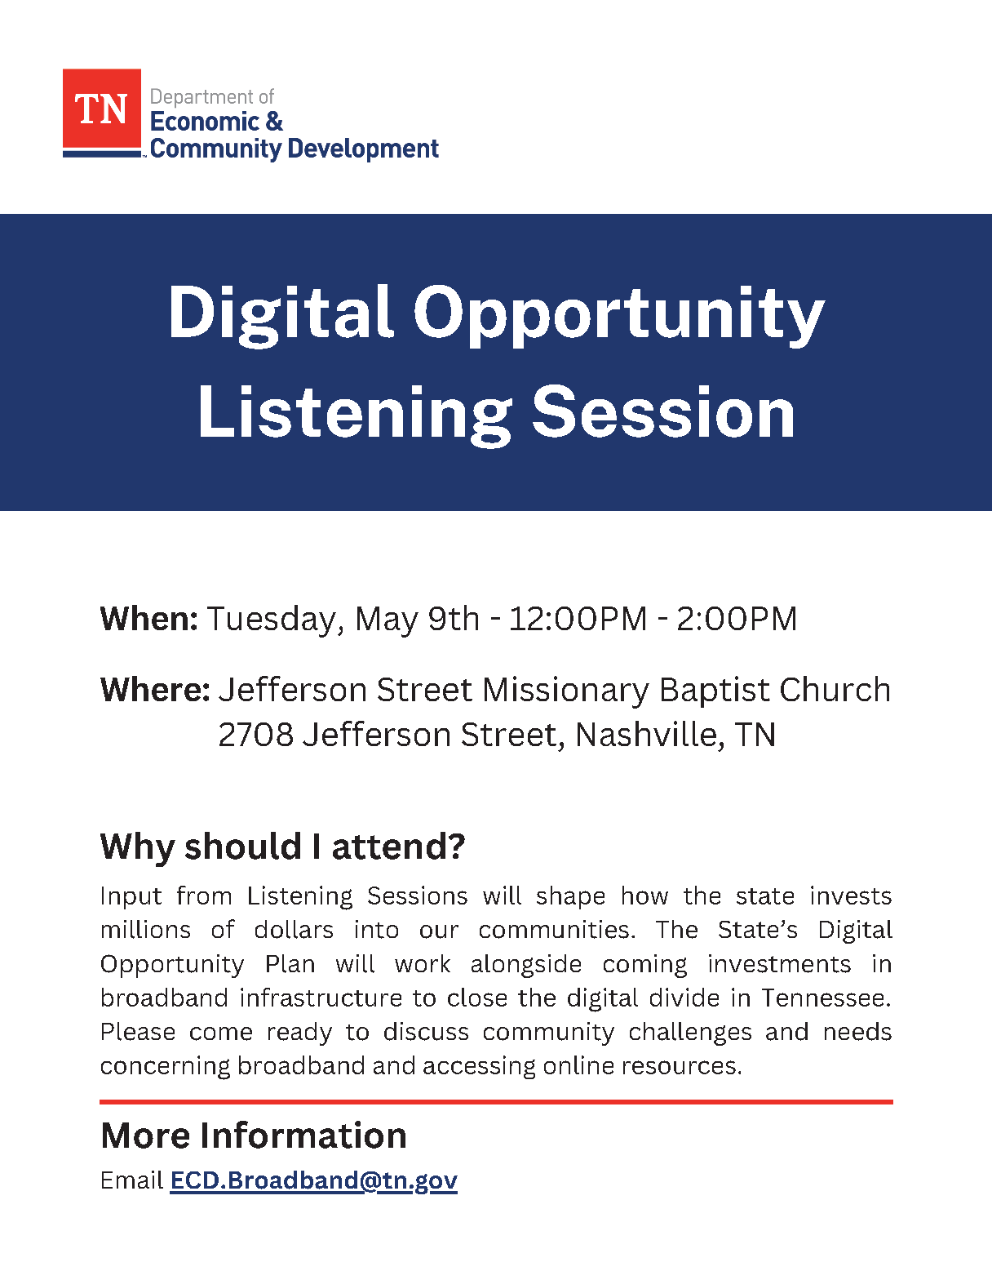 Digital Opportunity Listening Session flyer